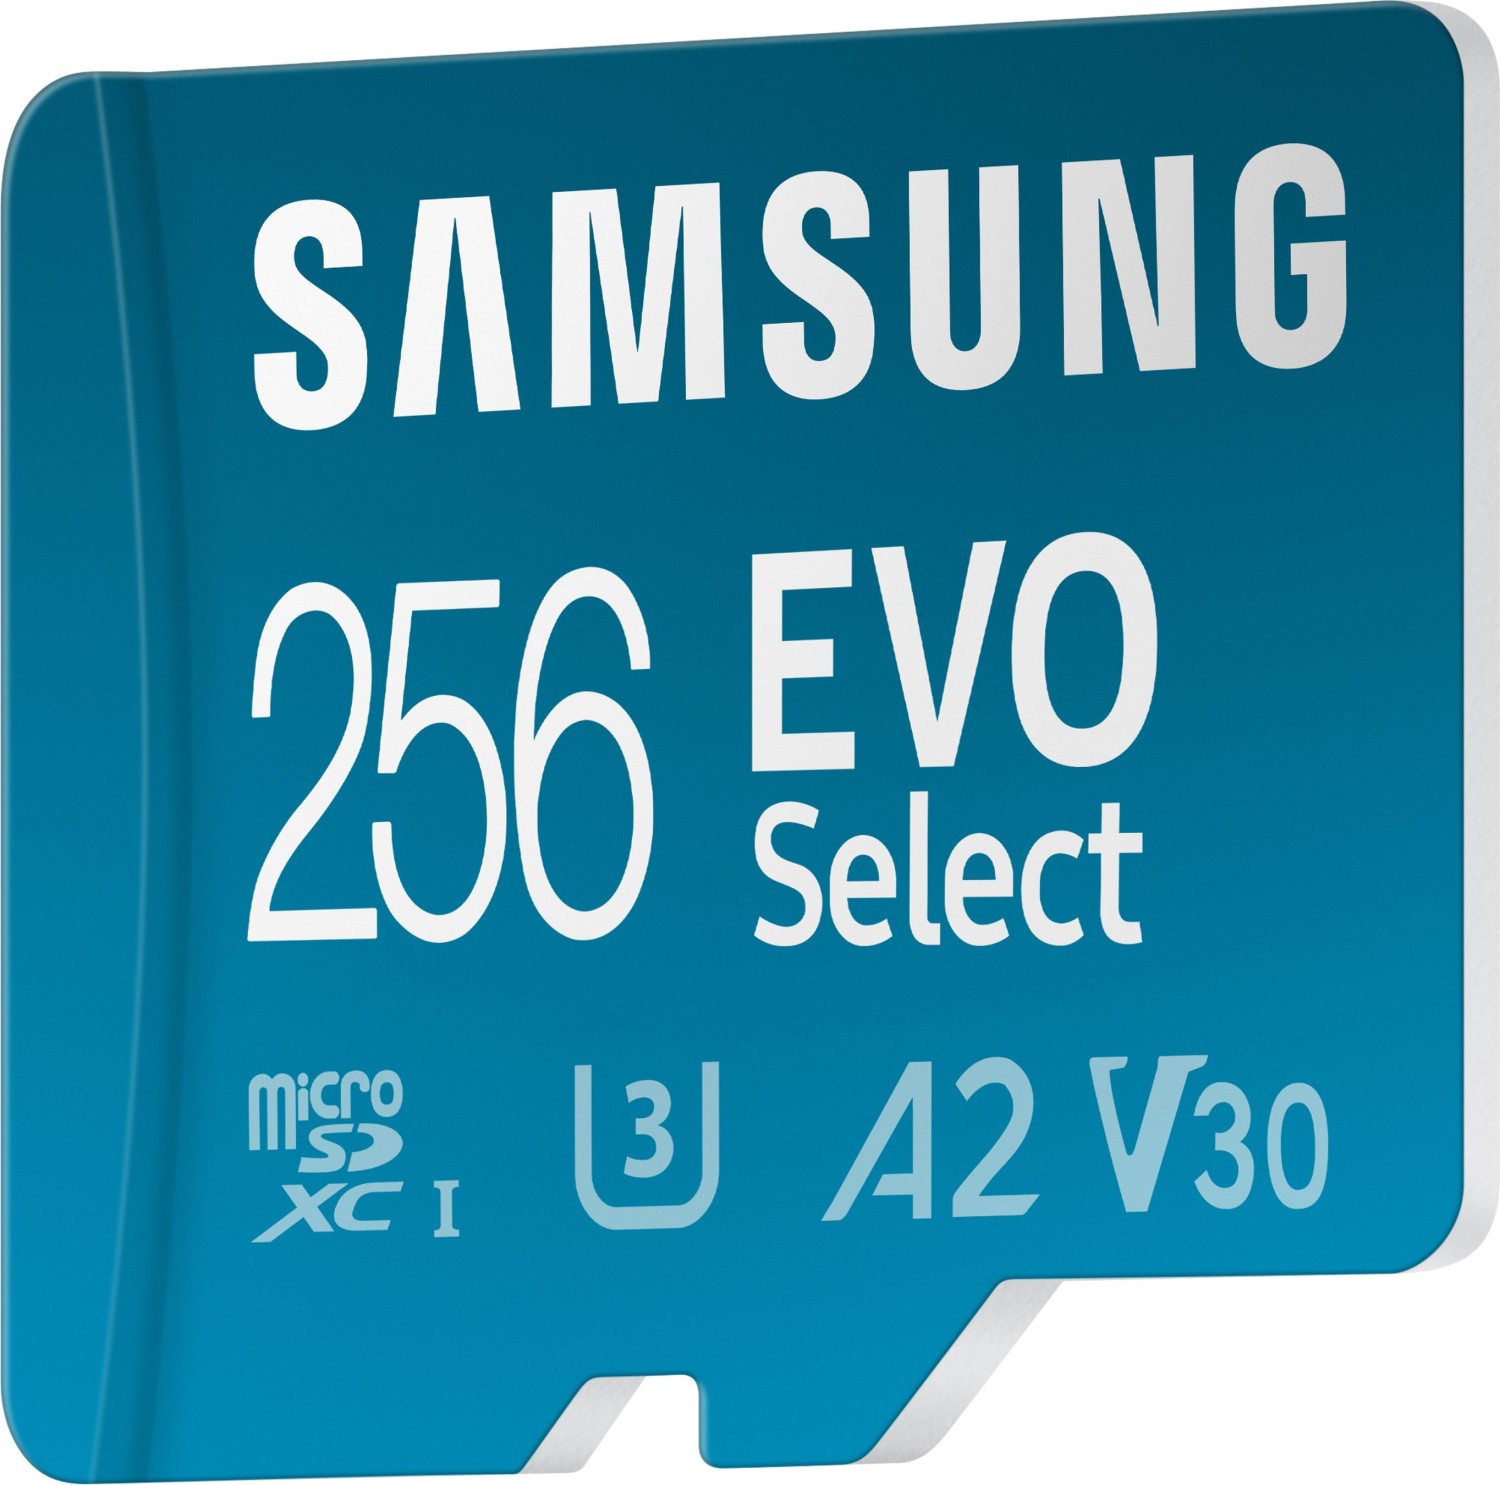 256 GB Samsung EVO Select R130 microSDXC, Kit UHS-I U3, A2, Class 10